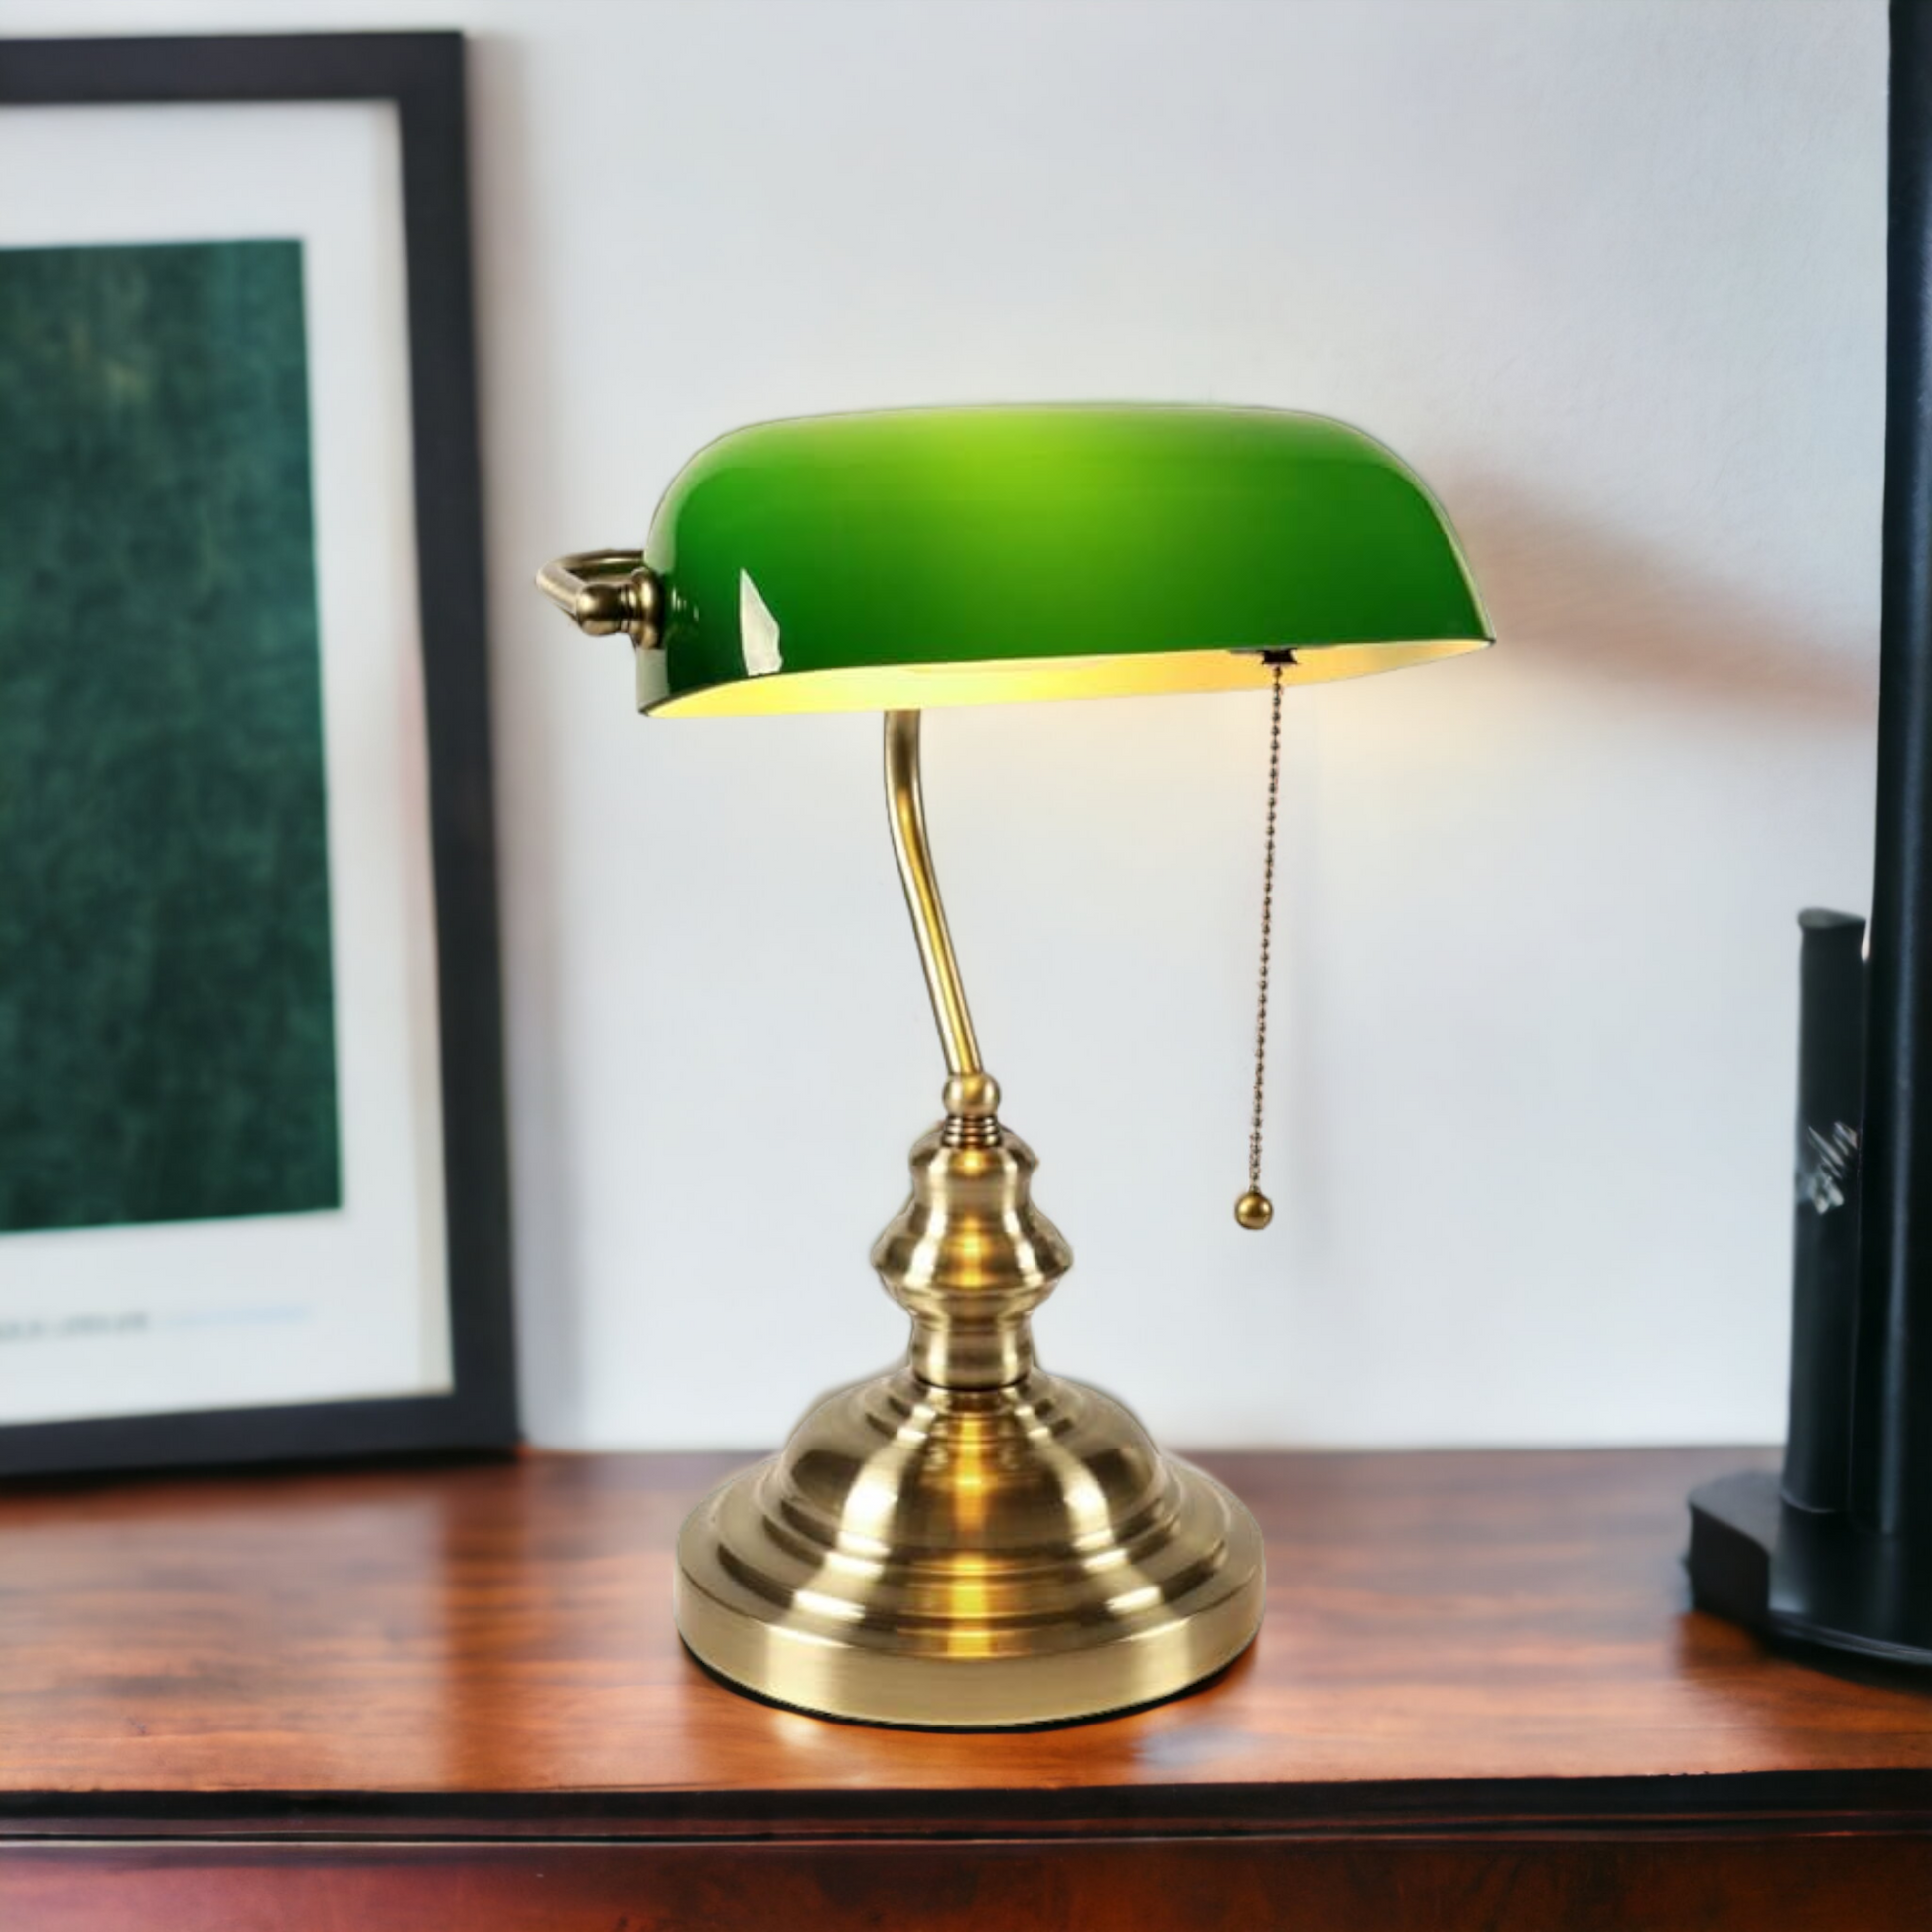 bankers lamp desk lamp green cased glass shade piano lamp